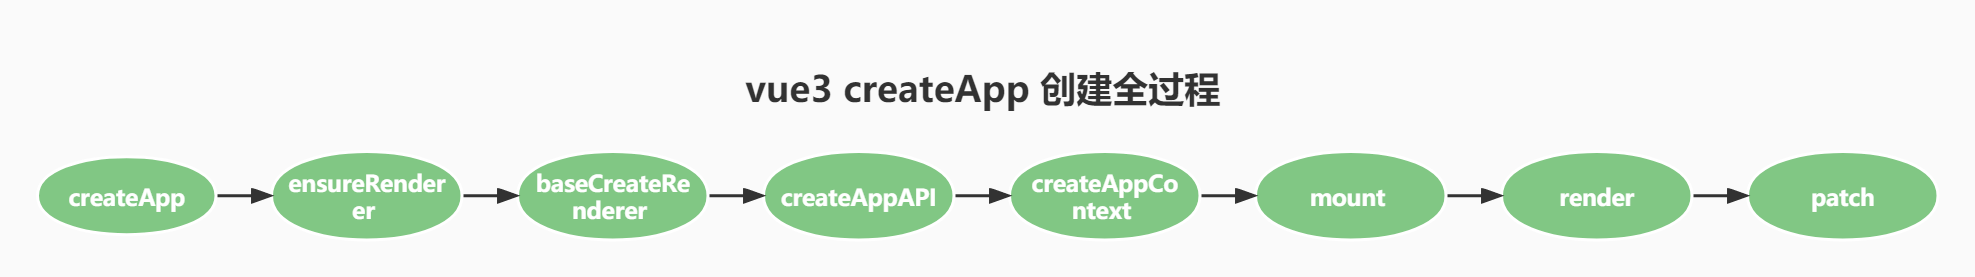 createApp创建过程解析